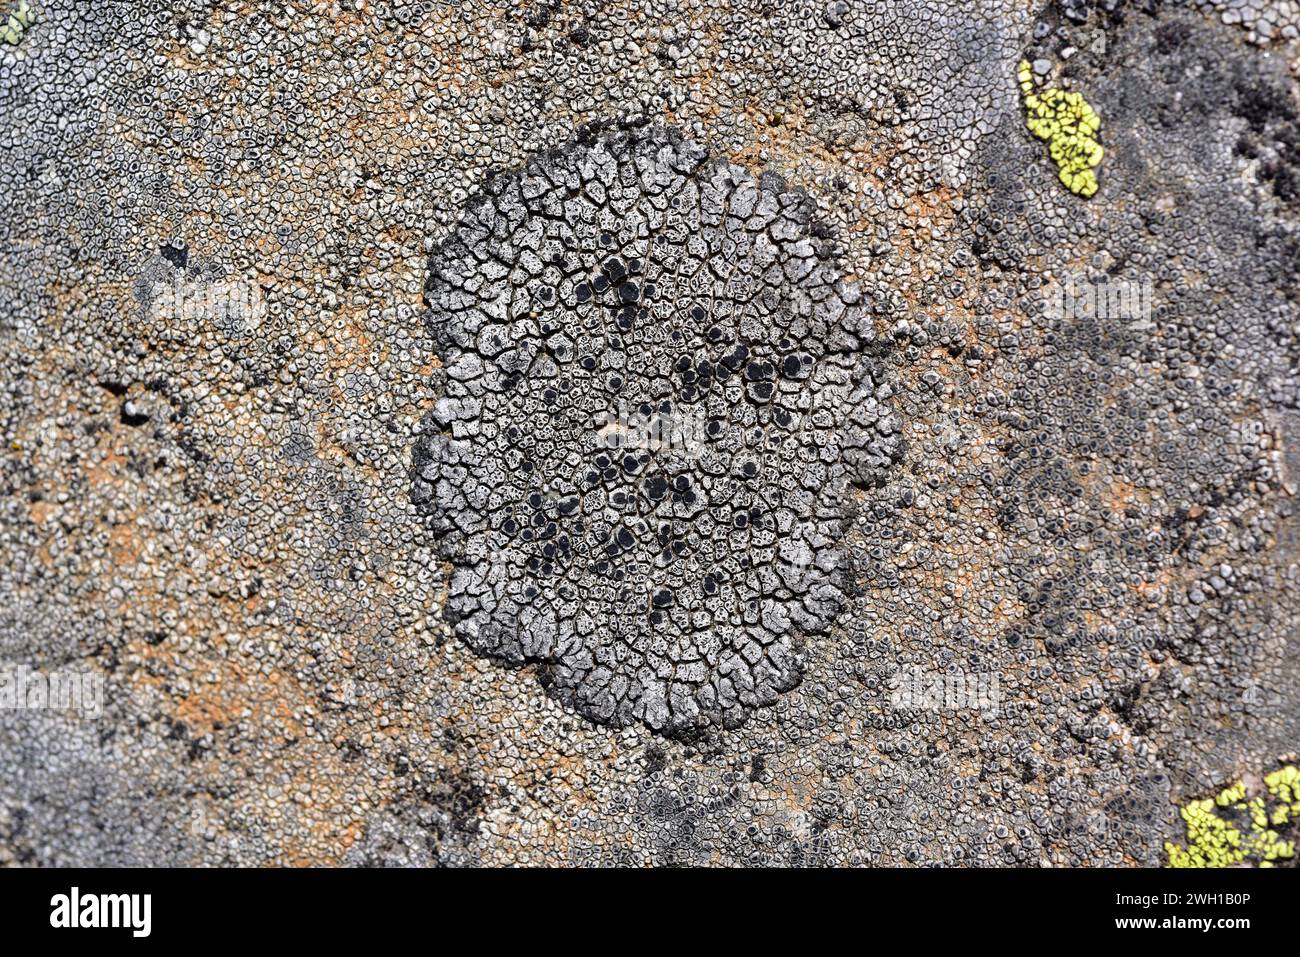 Lecanora schistina or Lecanora praepostera is a crustose lichen with black apothecia. This photo was taken in Arribes del Duero, Zamora province, Cast Stock Photo